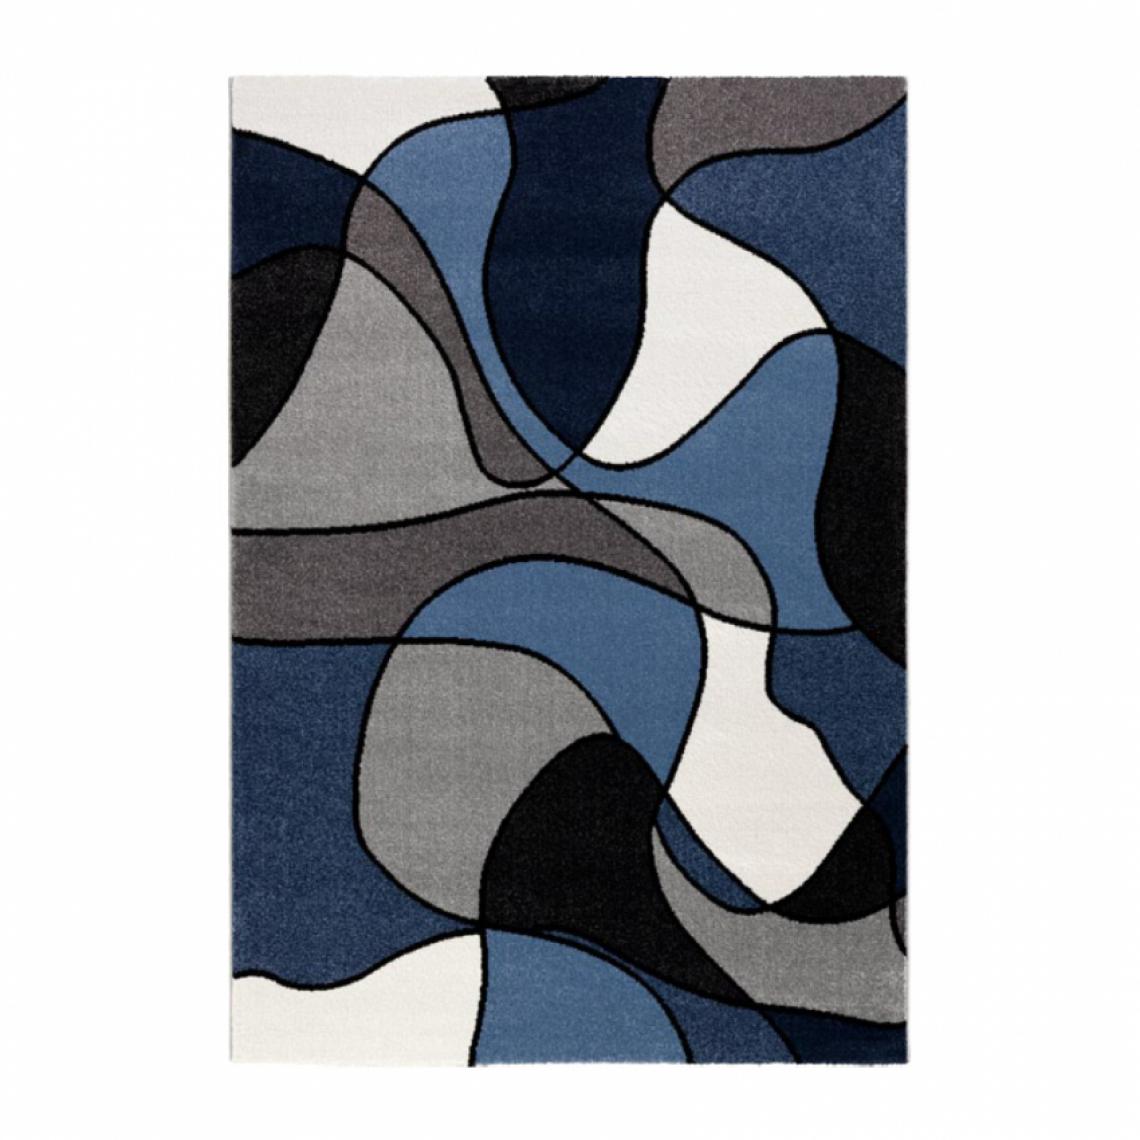 Wmd - Tapis design moderne Milano motif géométrique pop art bleu blanc BLU015, Taille: 133 x 190 - Tapis